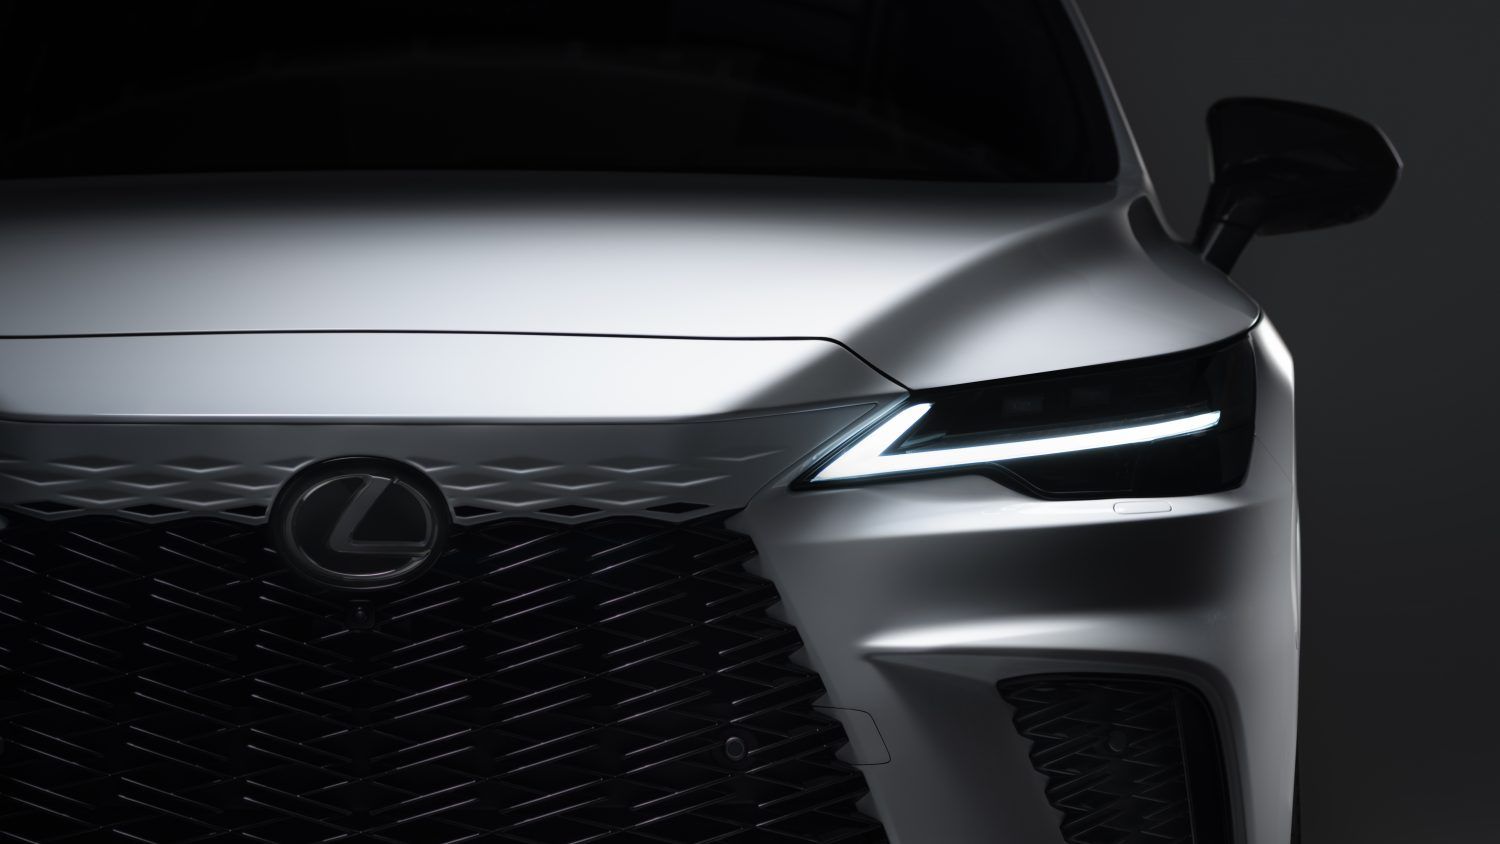 2023 Lexus RX's Face Teased Ahead of Debut